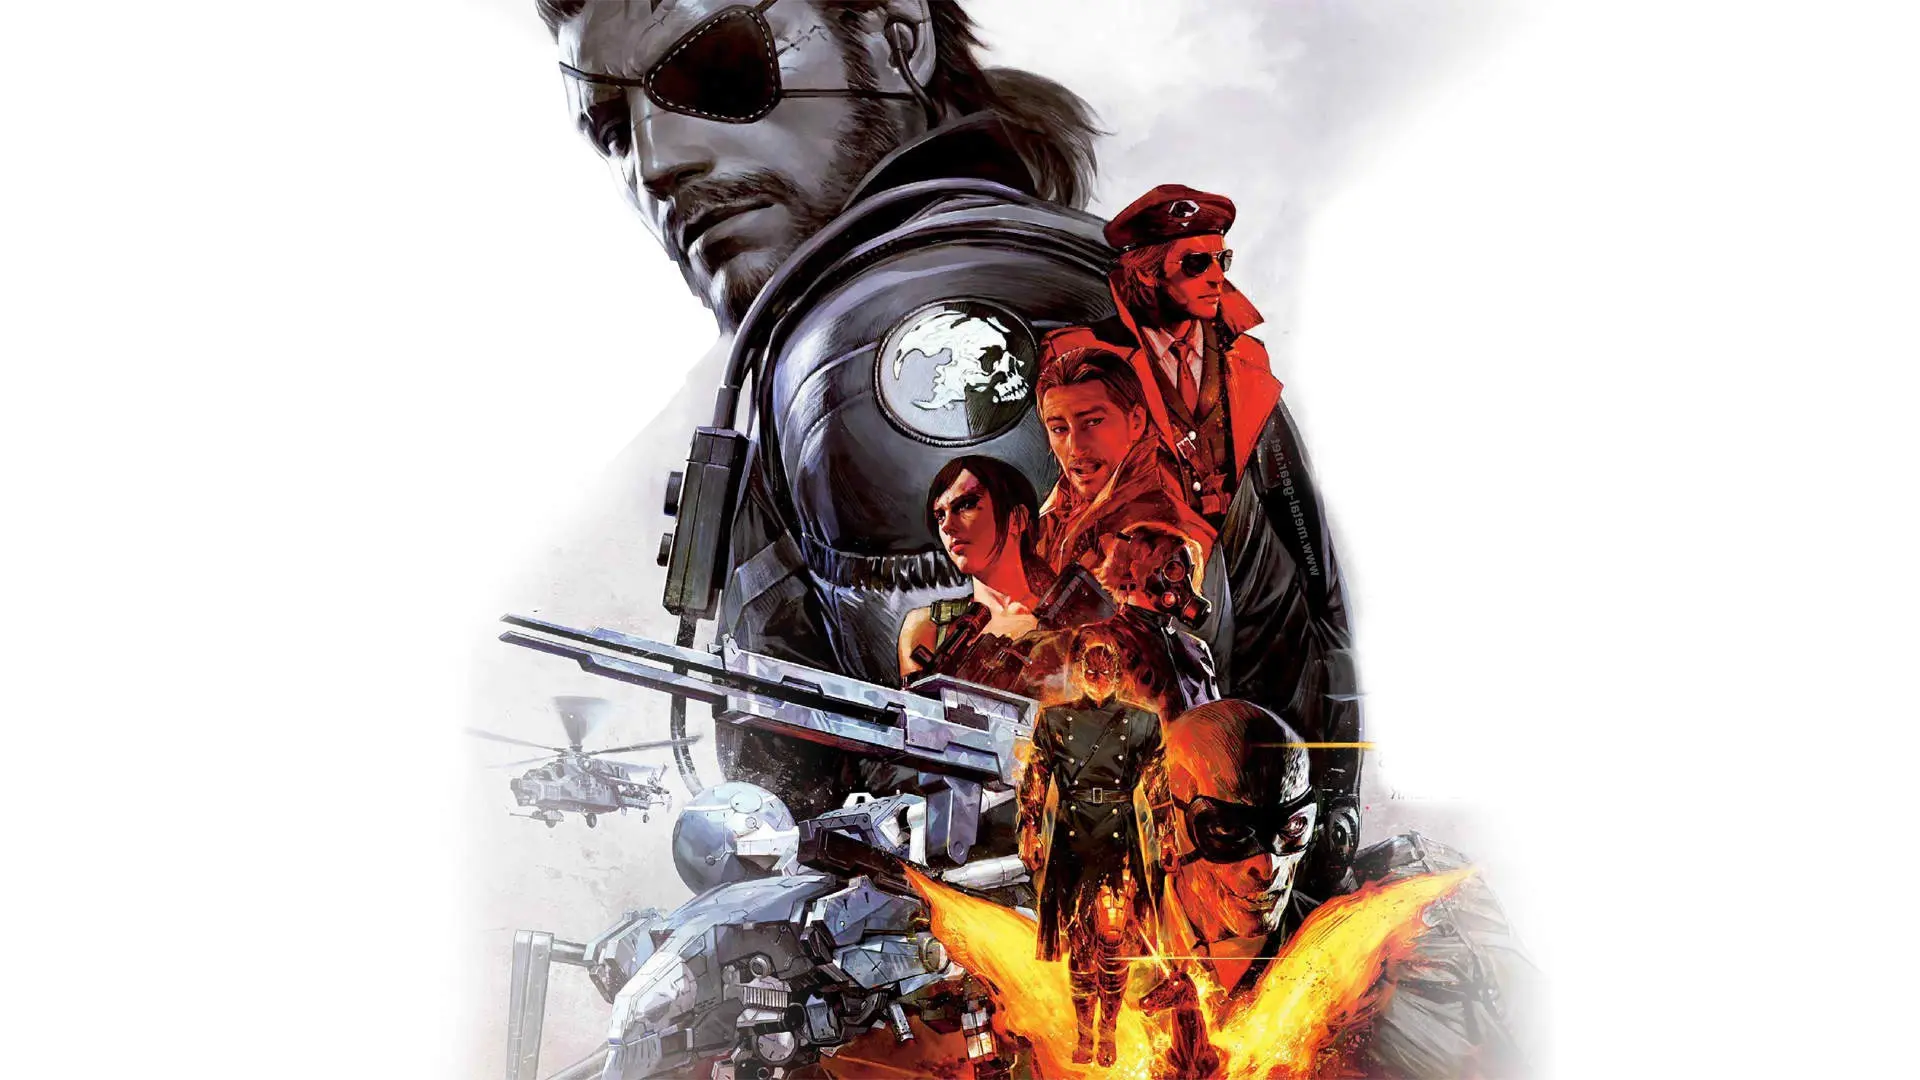 Wallpaper hd: Metal Gear Solid V The Phantom Pain - download free in 4K,  wallpaper Game